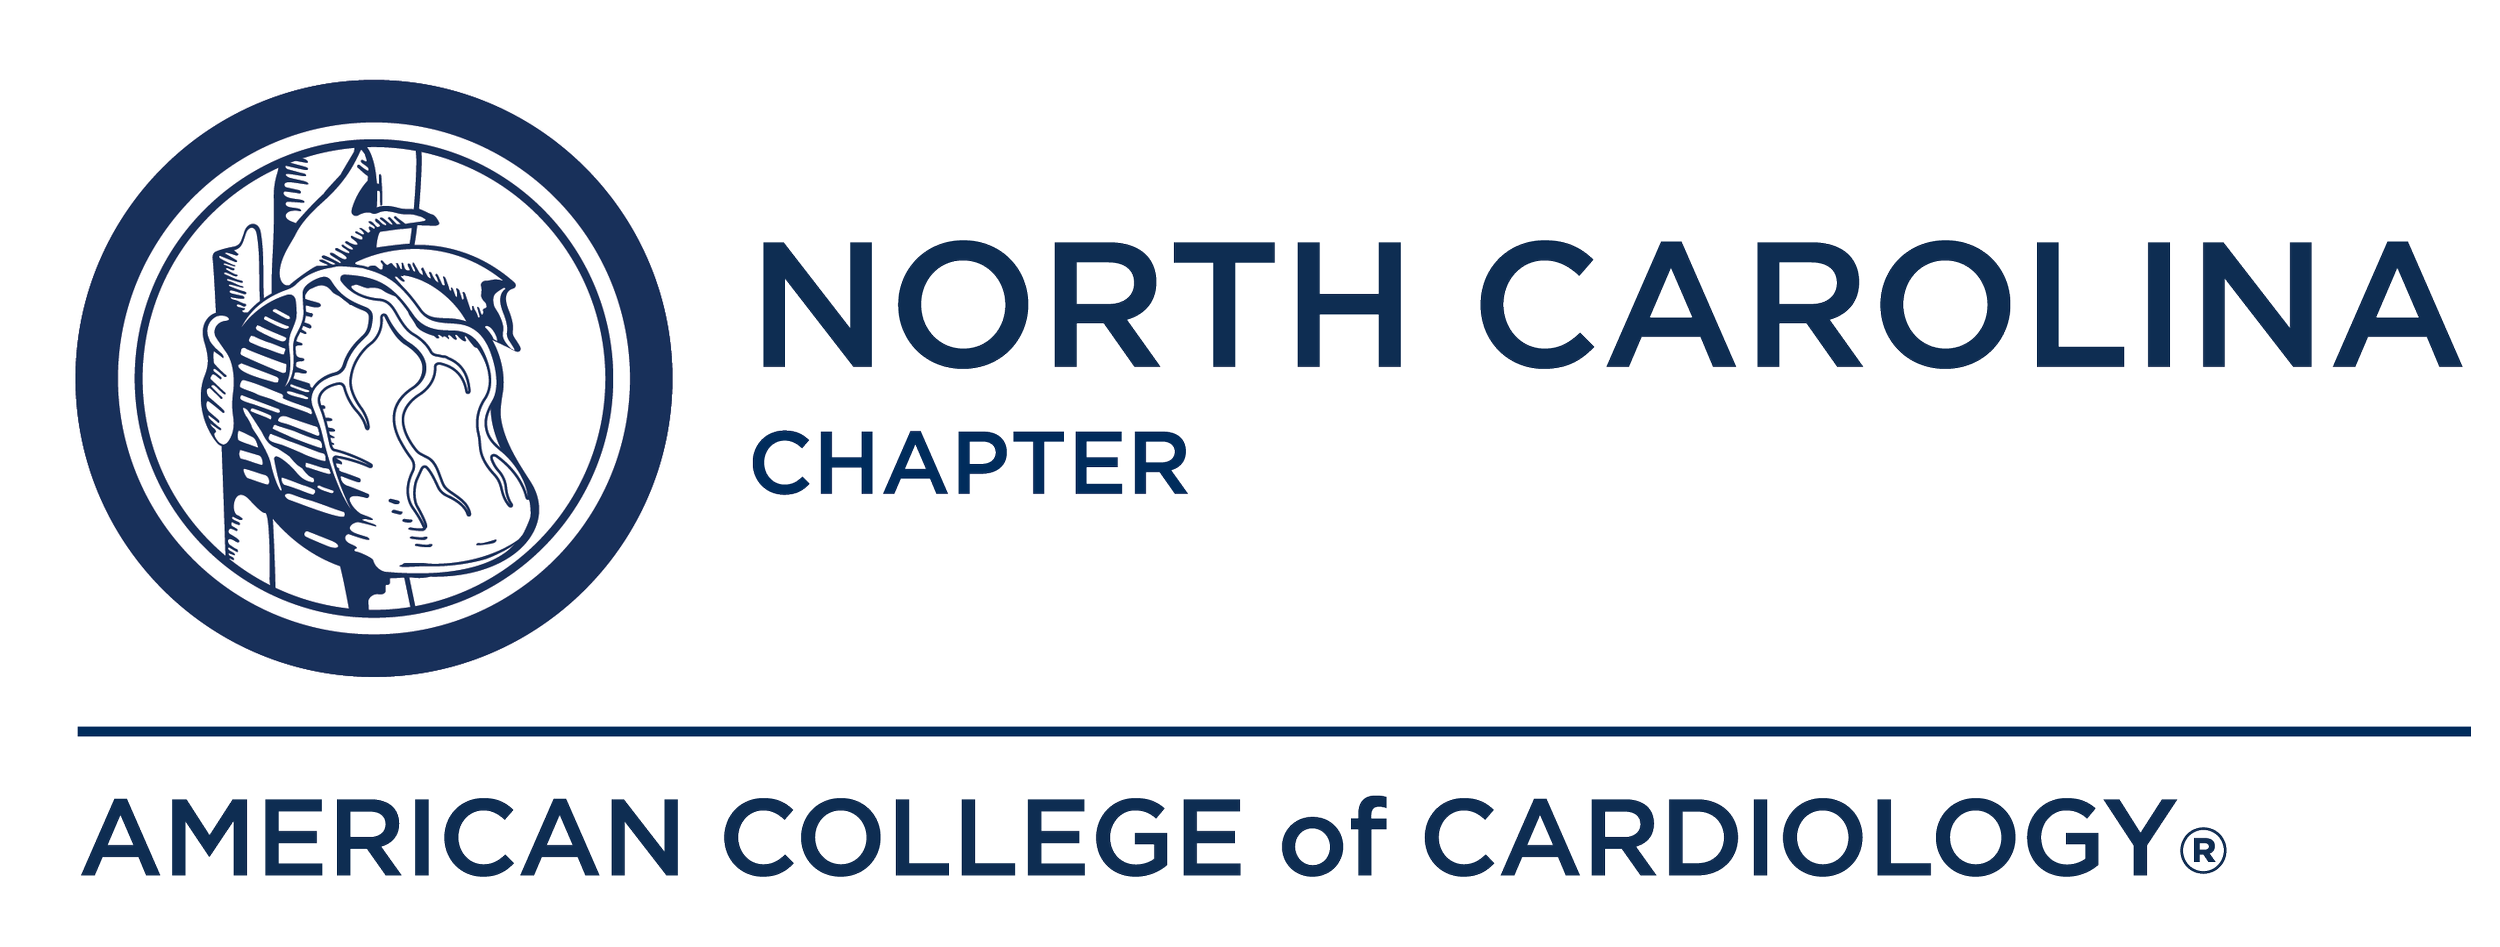 North Carolina - American College of Cardiology